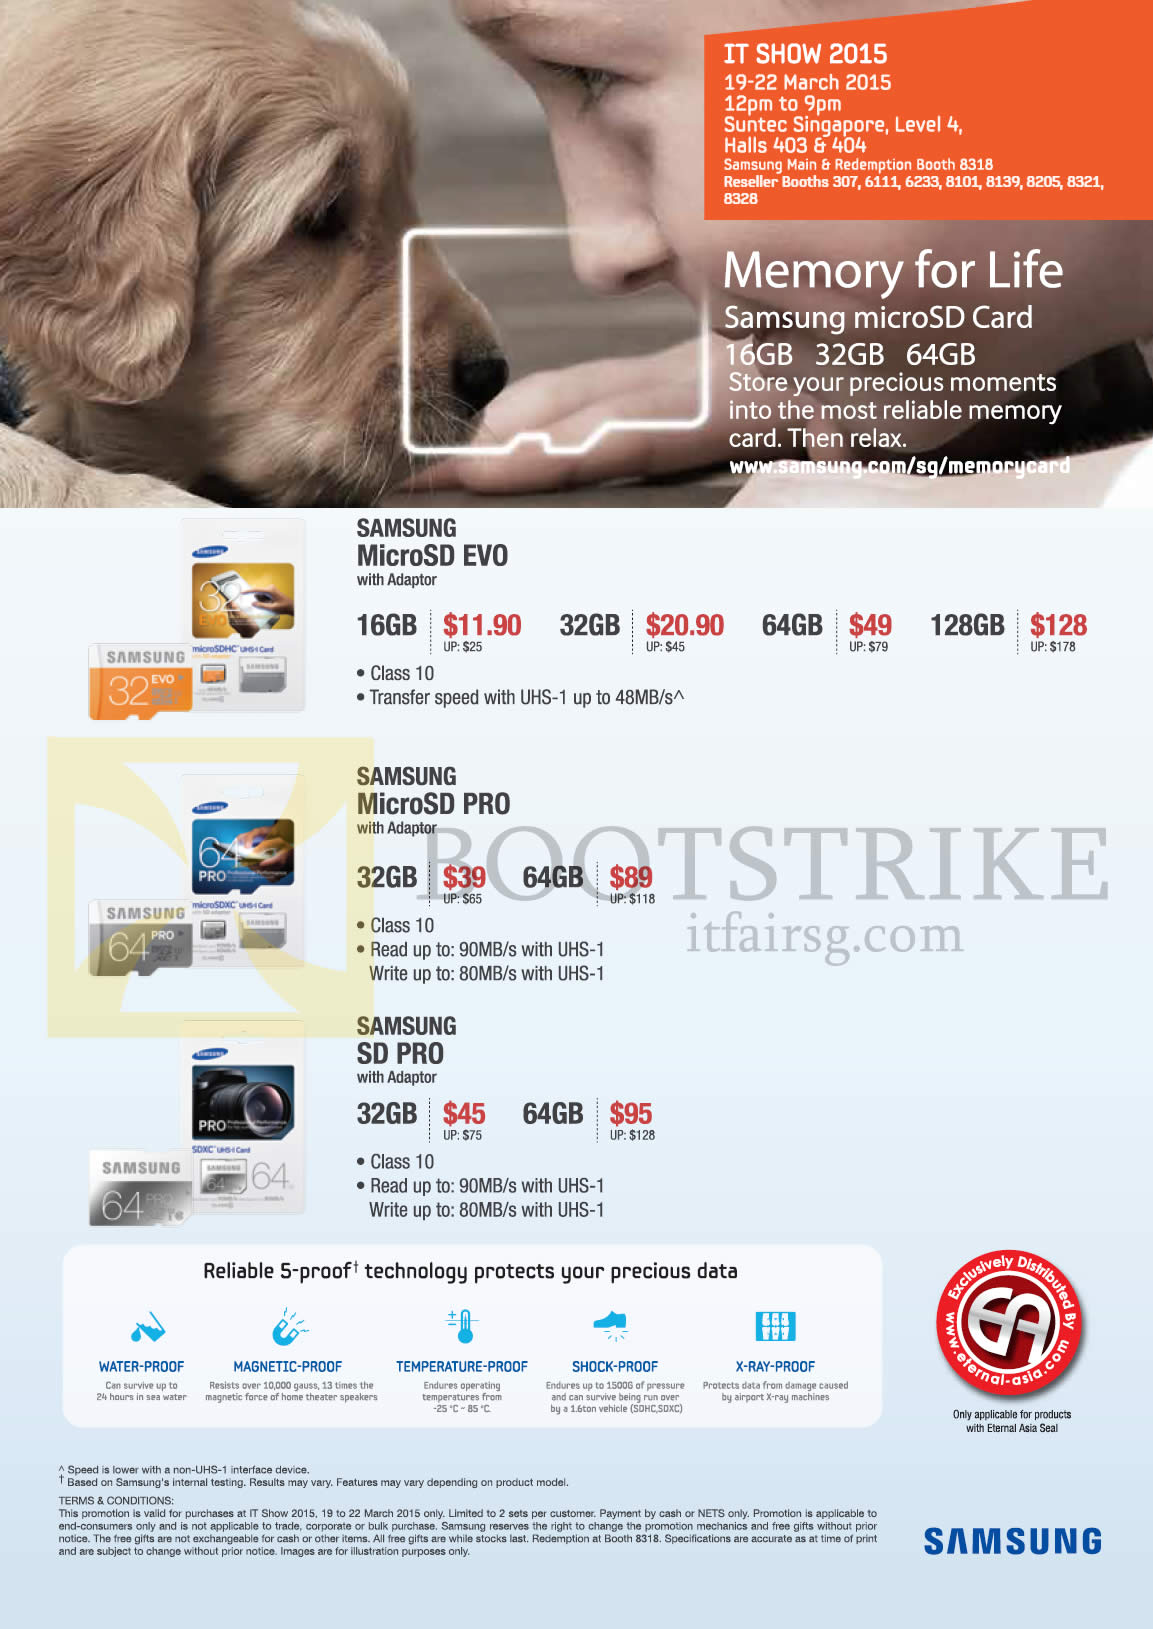 IT SHOW 2015 price list image brochure of Samsung Memory Cards MicroSD Evo, Pro, SD Pro